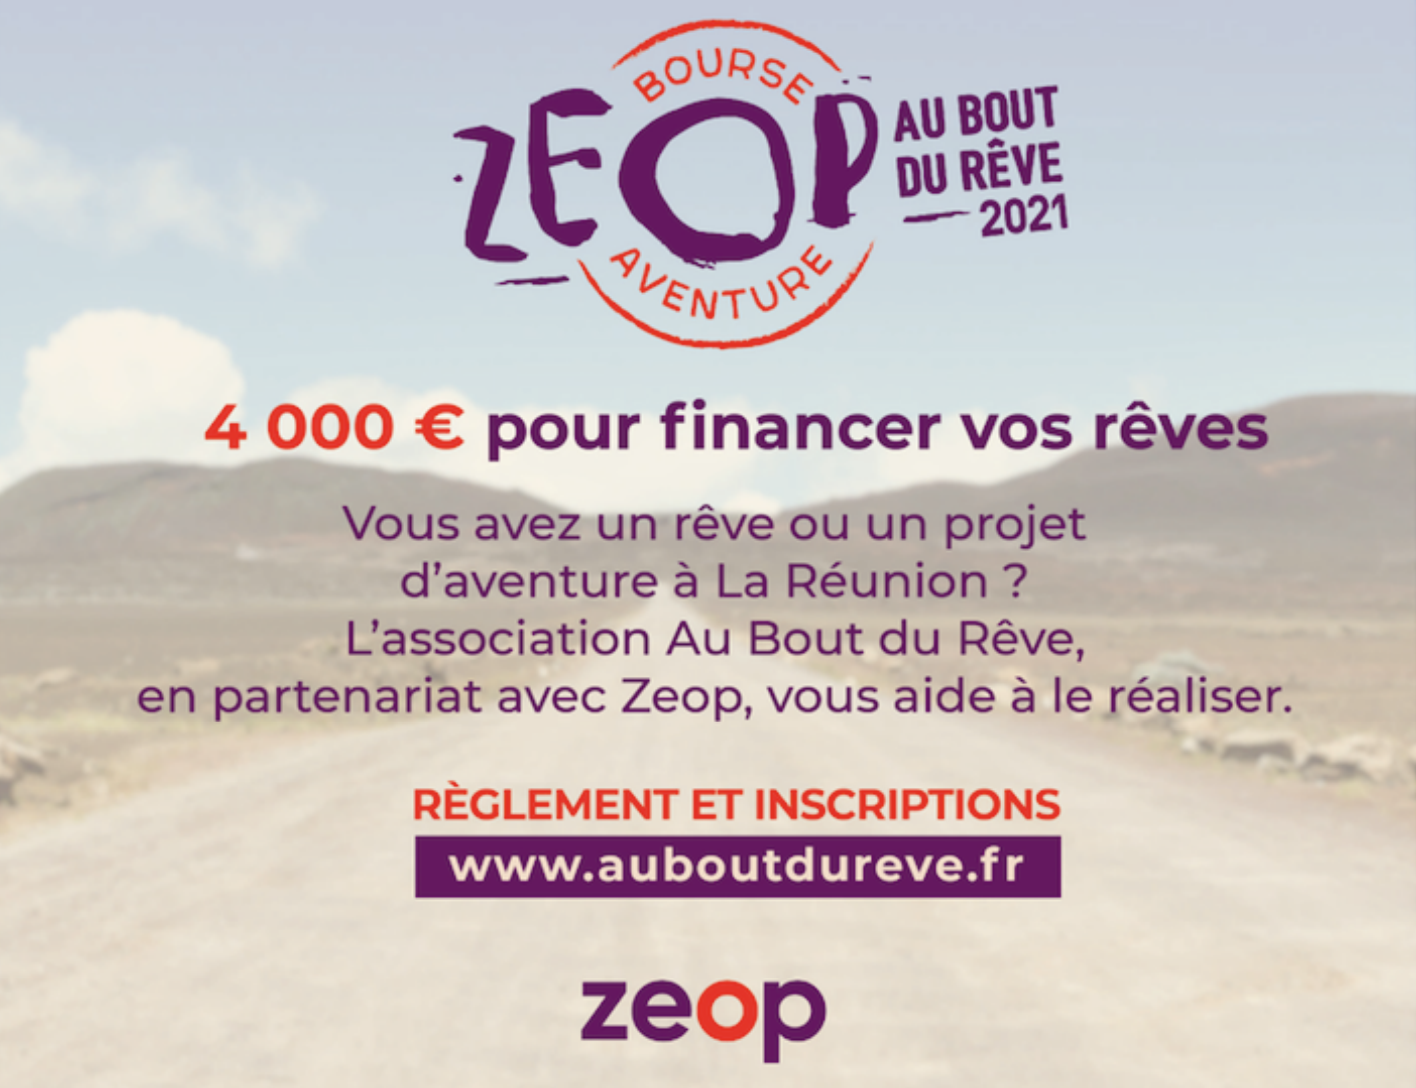 Bourse ZEOP Aventure : 4000 euros à gagner pour financer des projets